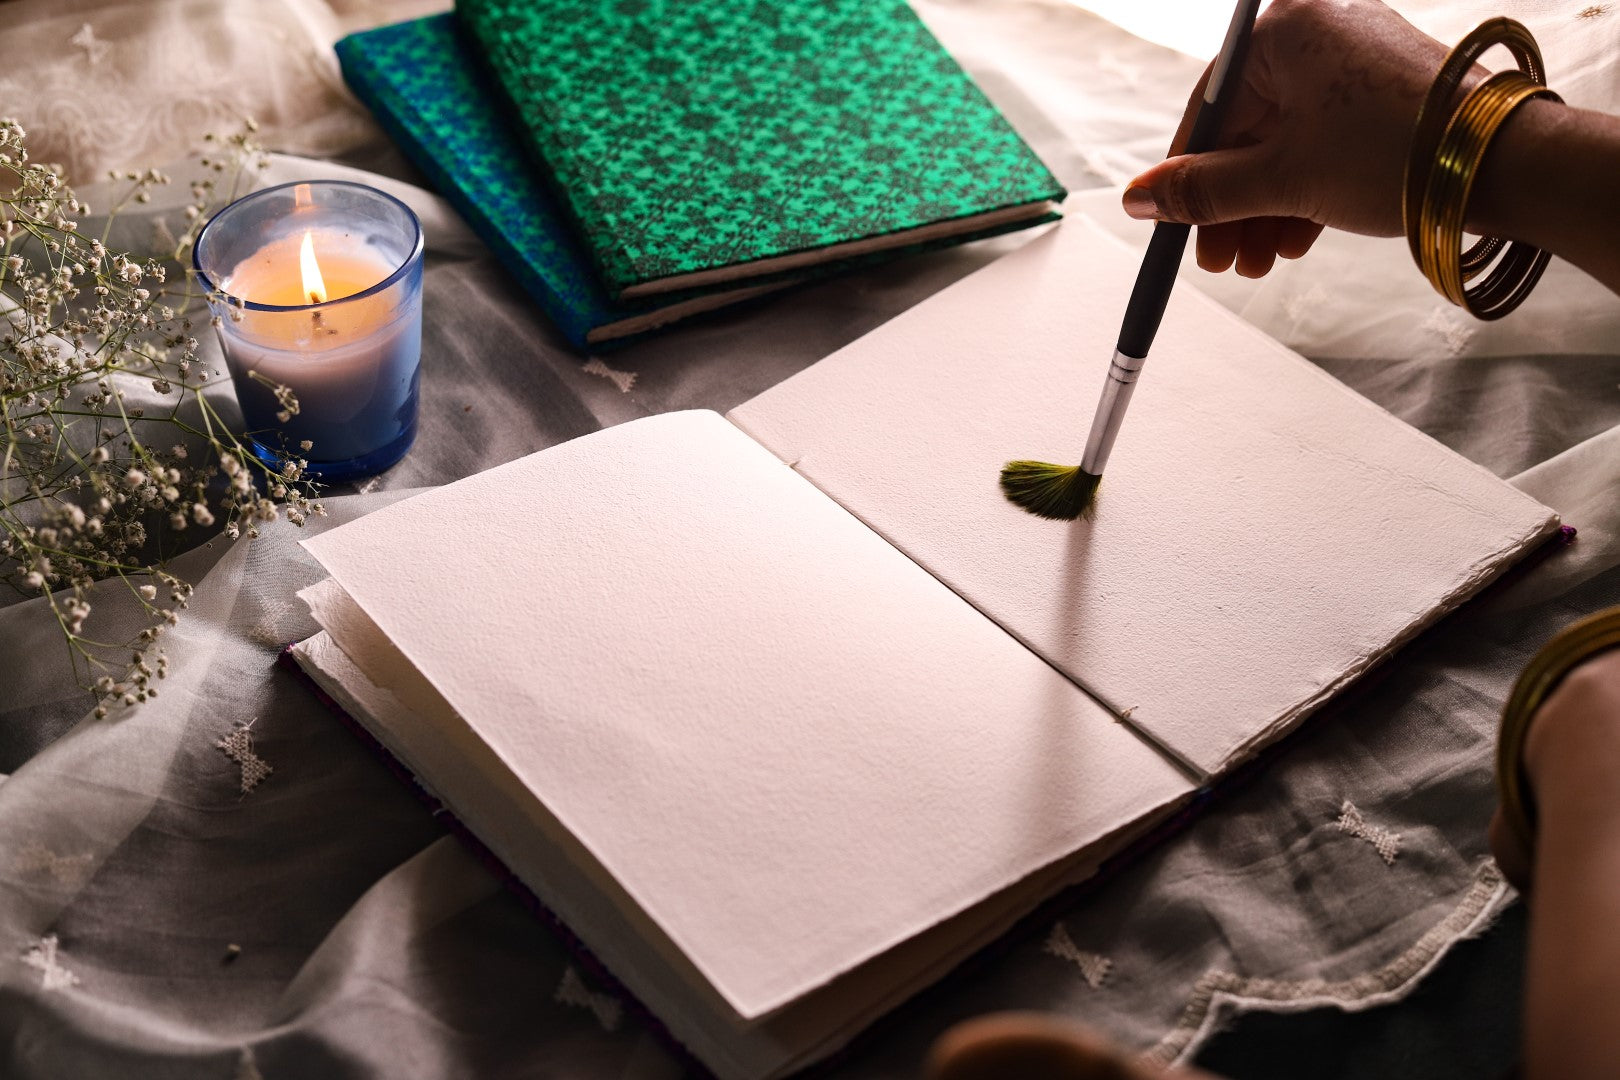 blue-pine-arts-premium-art-supplies-handmade-sketchbooks-artisanal-fabric-hand-bound-watercolor-journal-handcrafted-sketch-book-9265.jpg